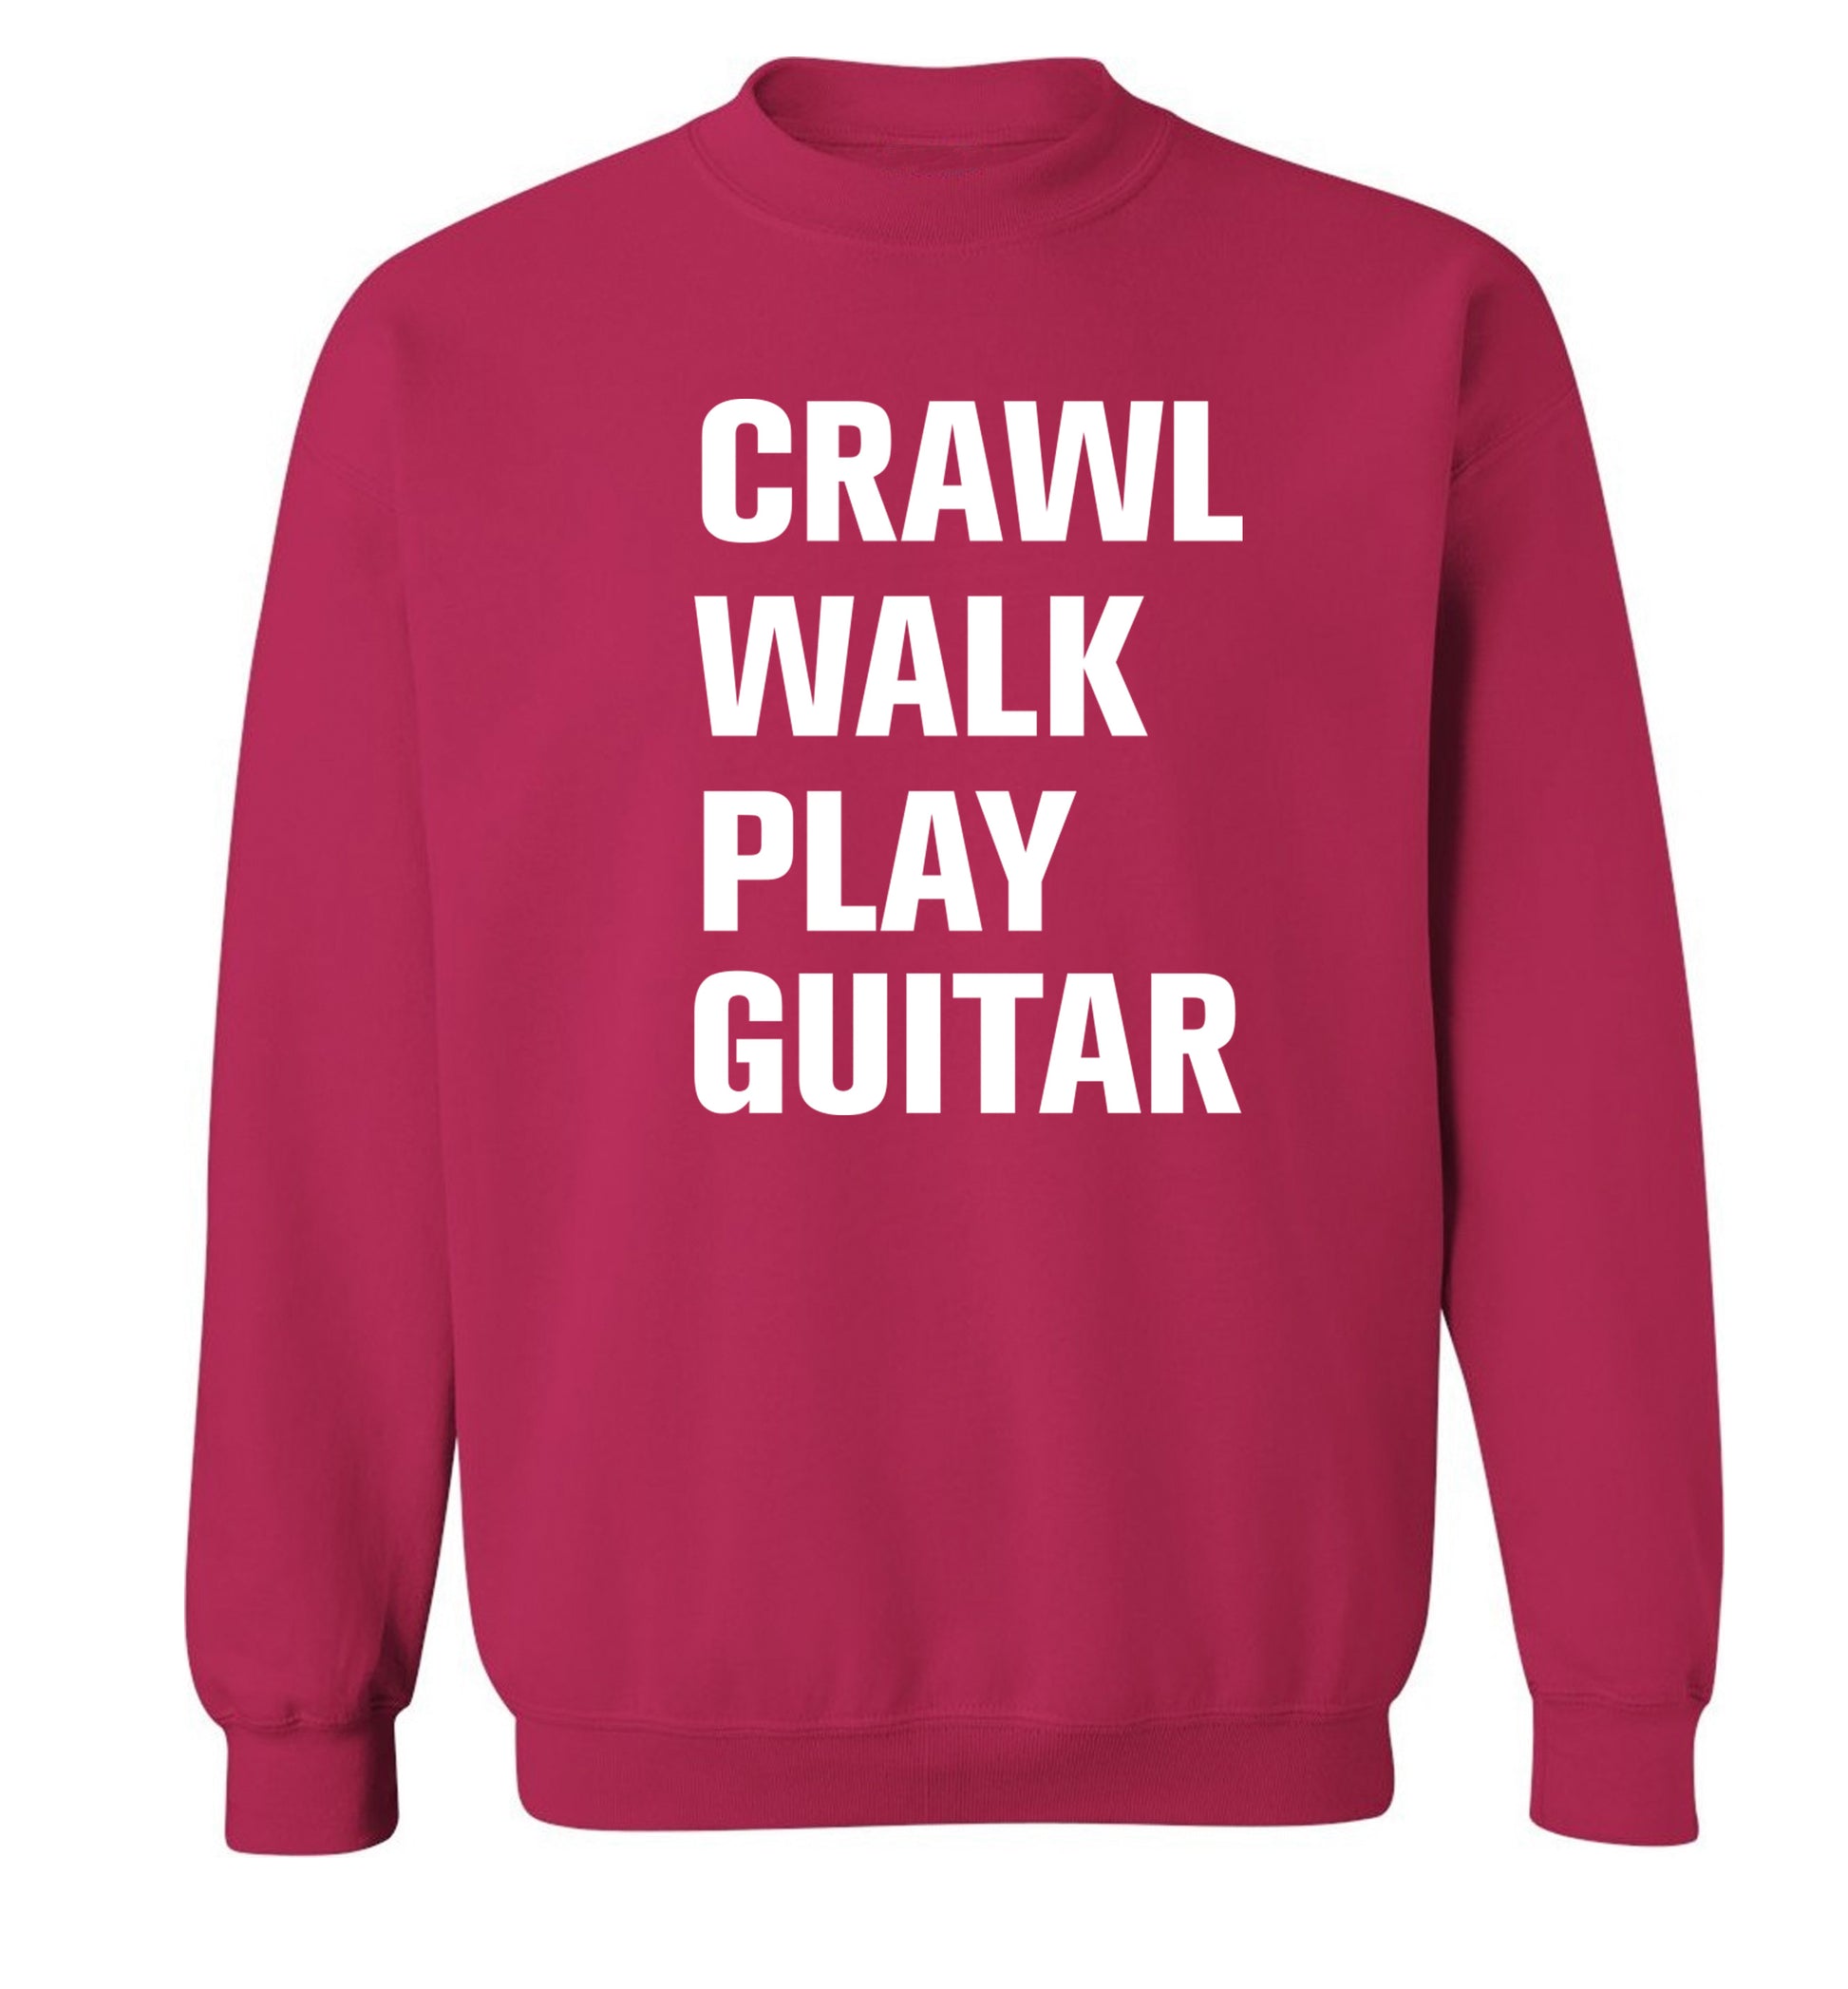 Crawl walk play guitar Adult's unisex pink Sweater 2XL